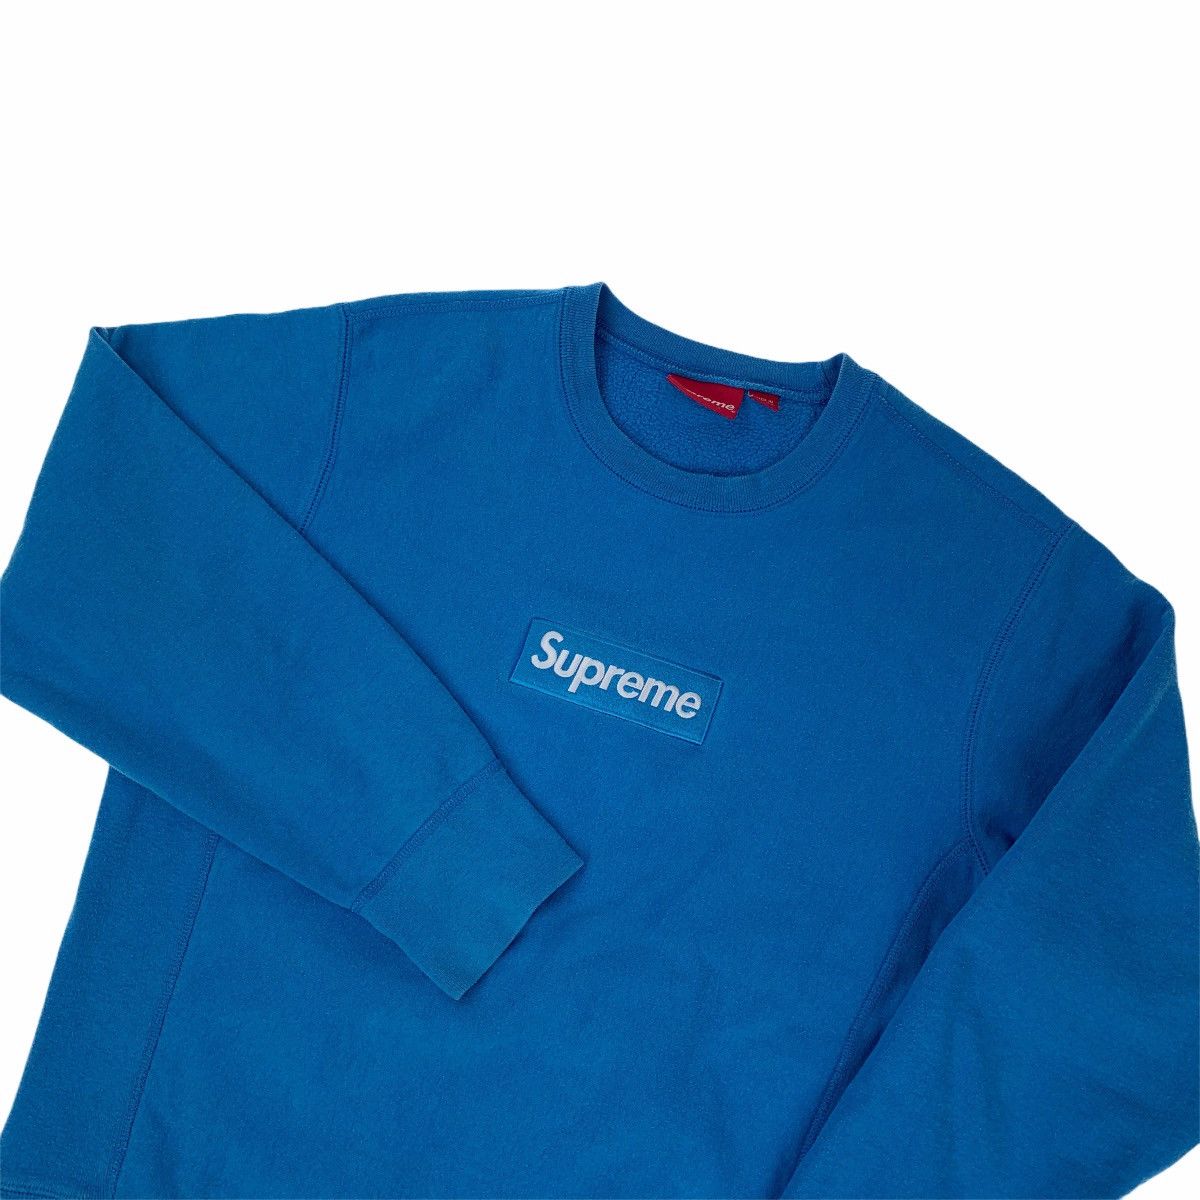 Supreme Supreme F/W 18 Bright Royal Blue Box Logo Sweatshirt | Grailed